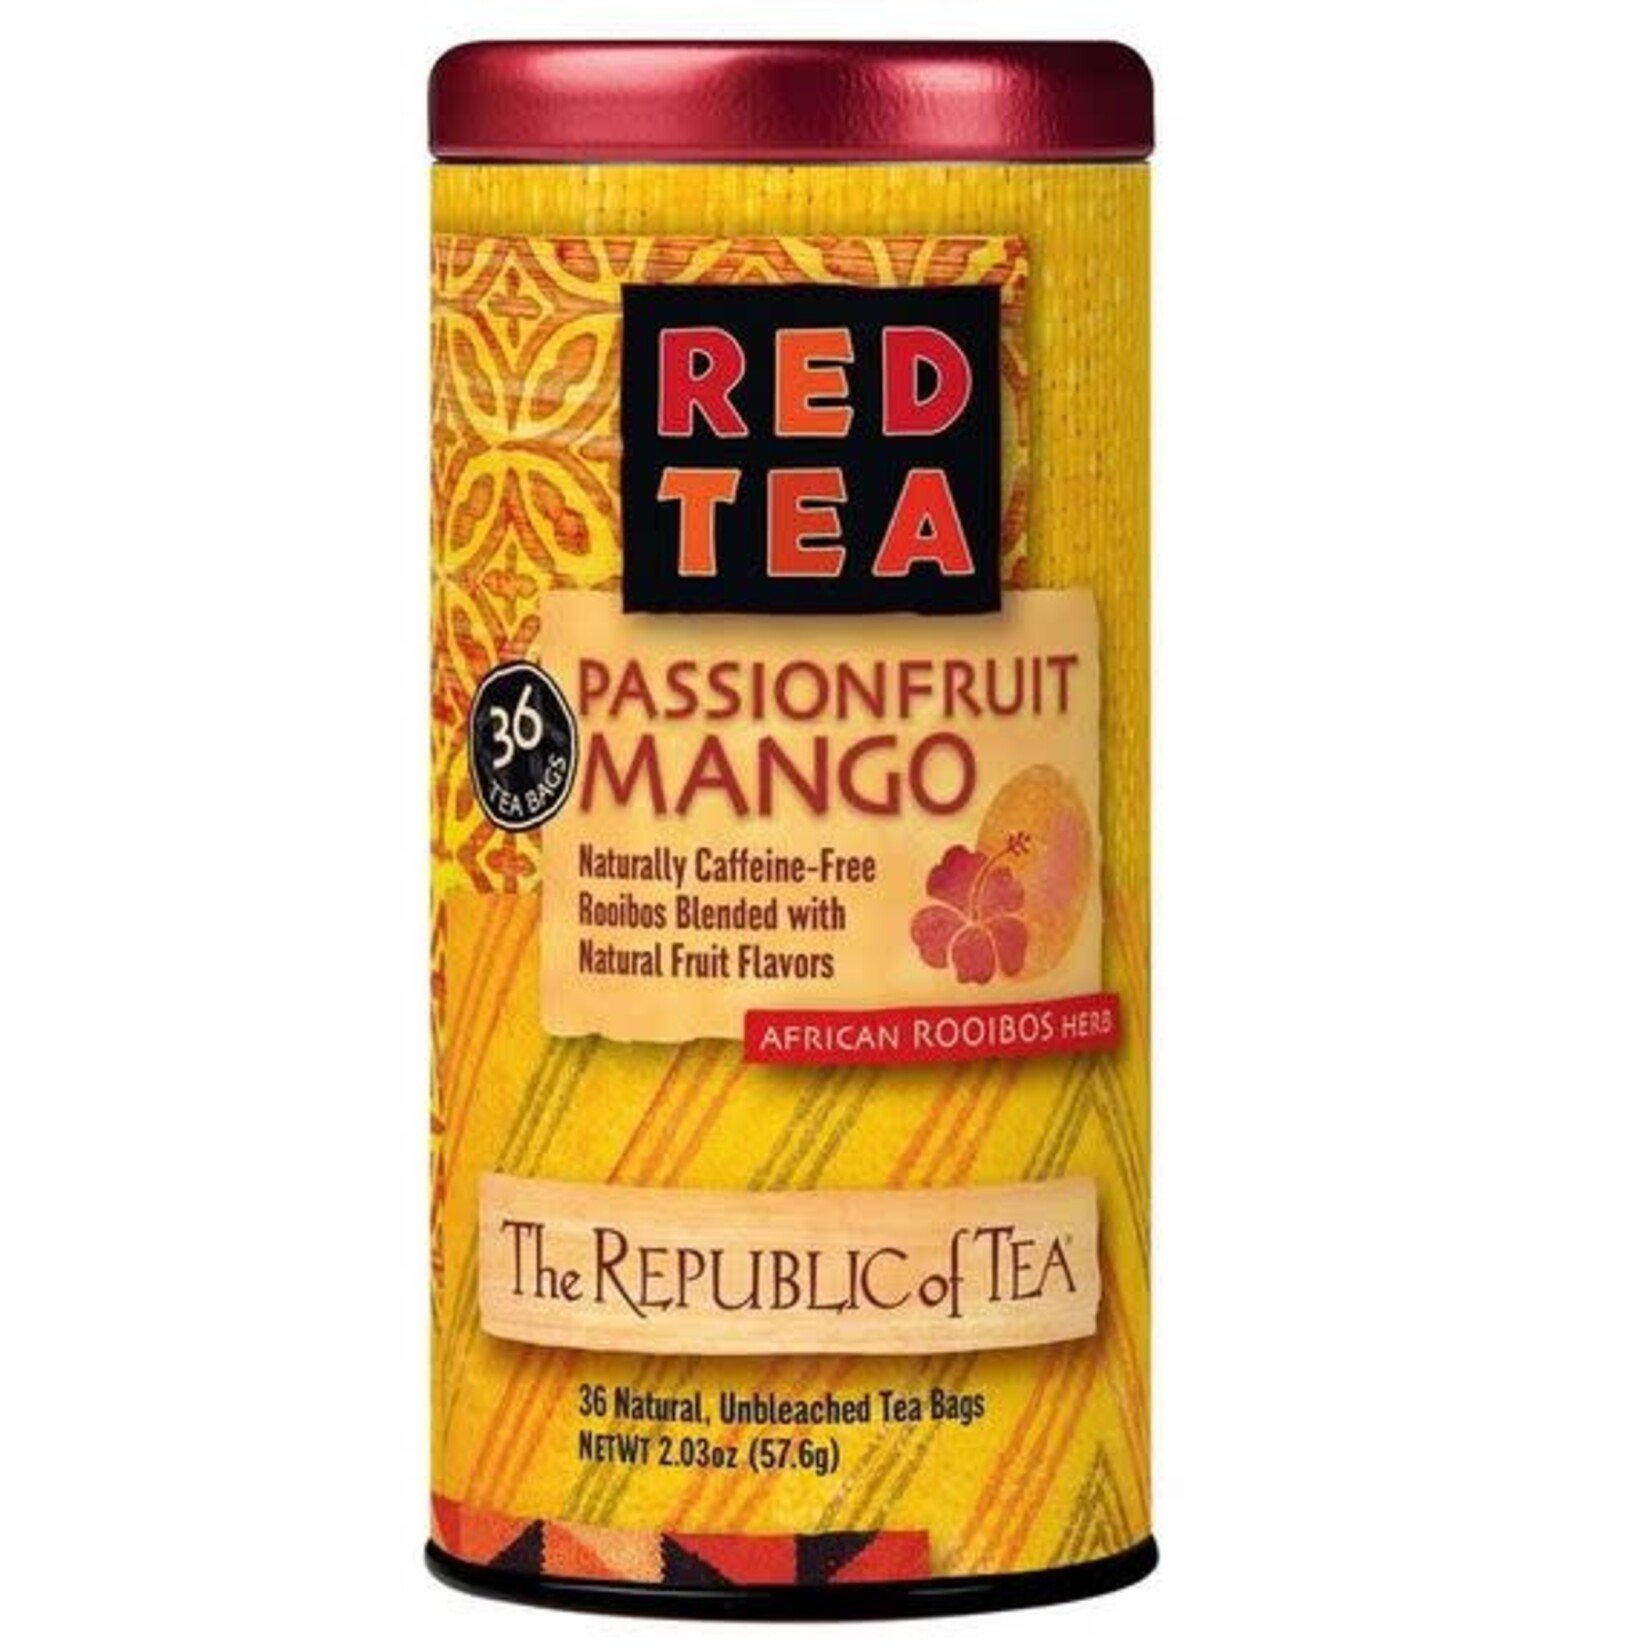 The Republic of Tea Tea: Passionfruit Mango Red Tea (36 Tea Bags)